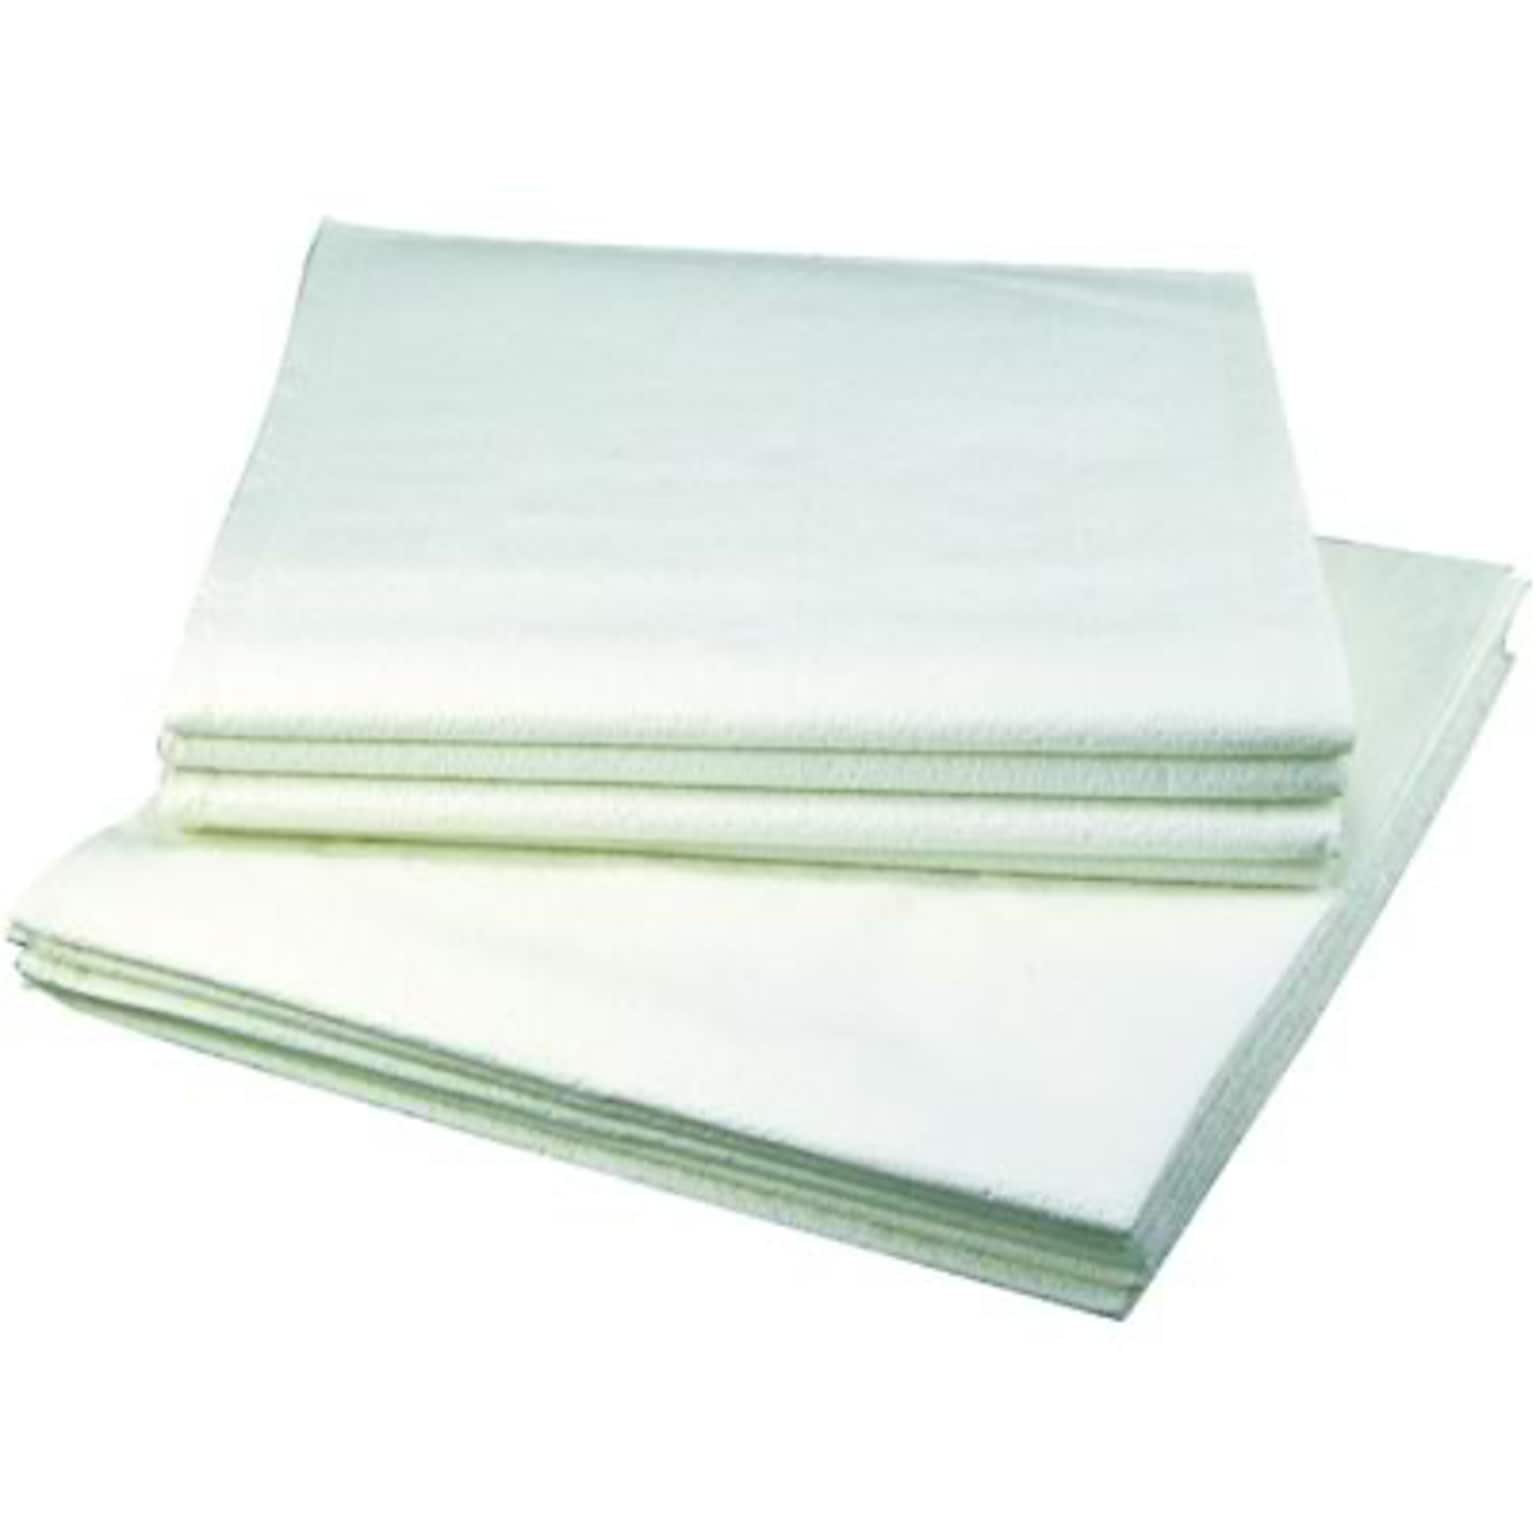 Medical Arts Press Disposable White Drape Sheets, 2-Ply Tissue, 40x60, 100/Case